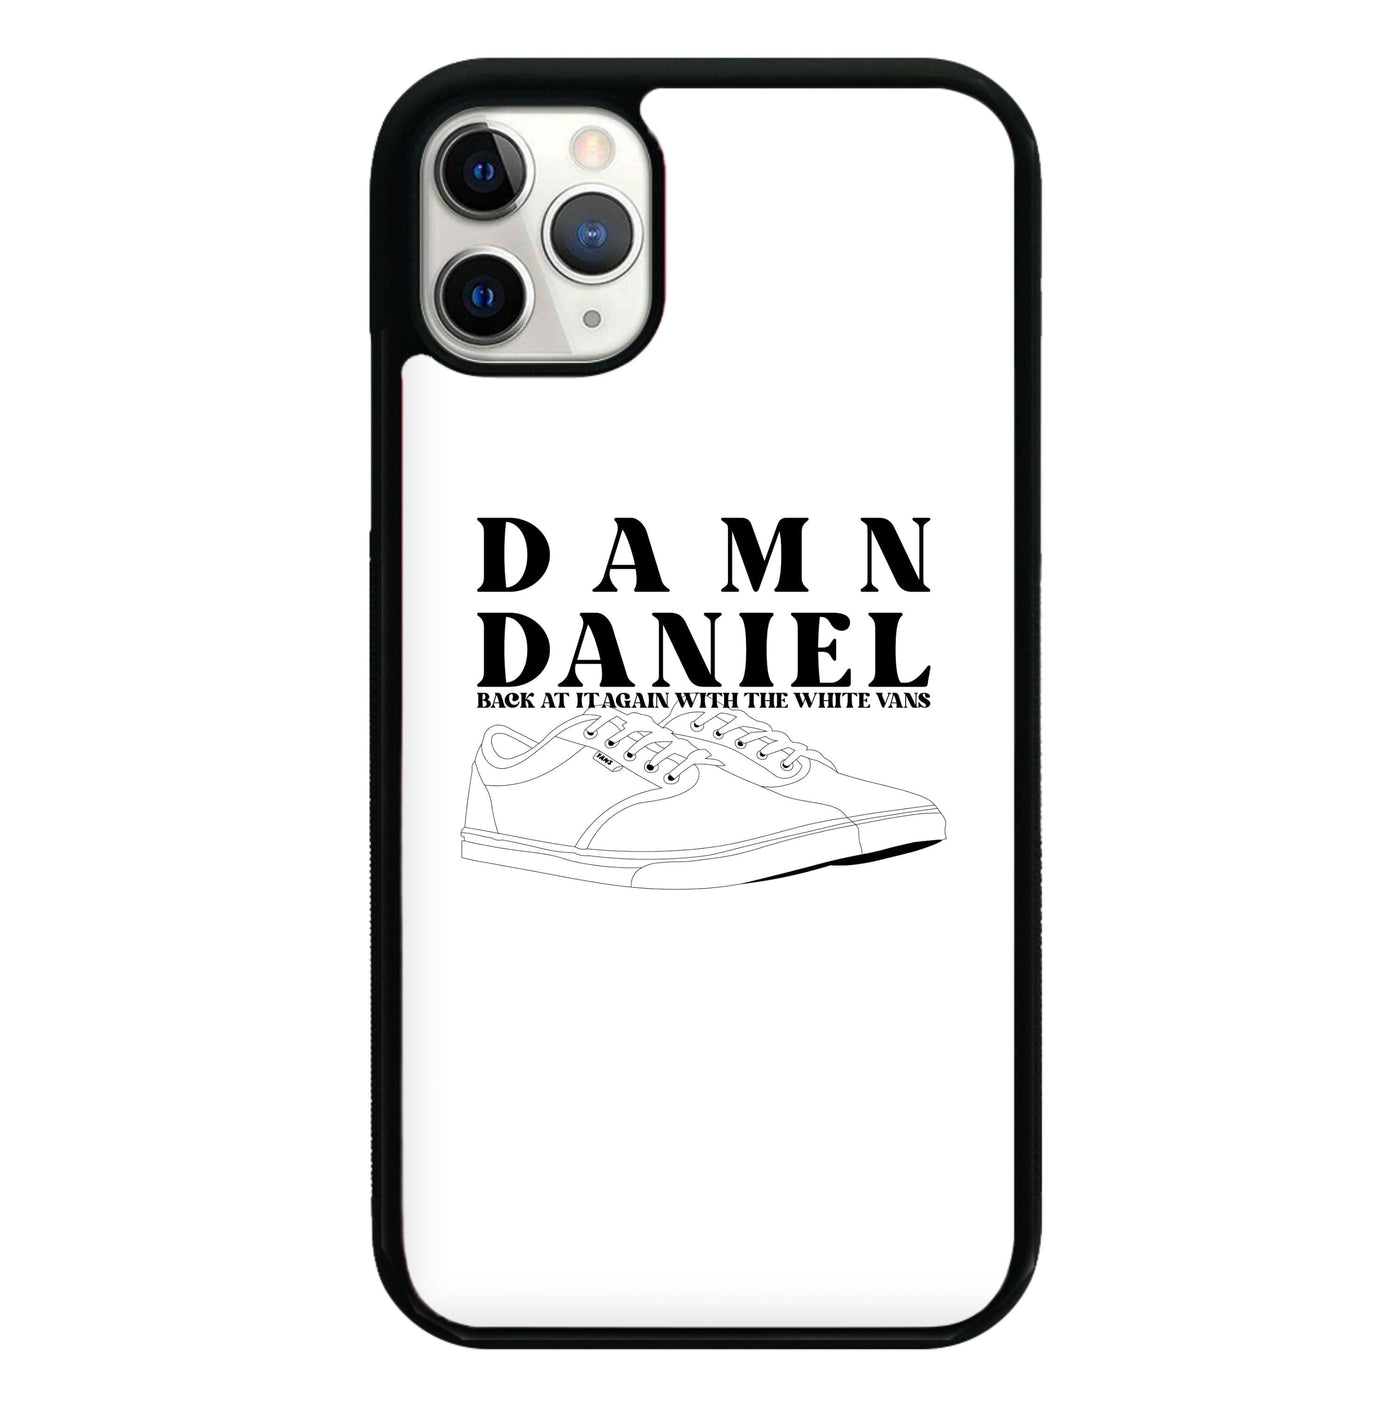 Damn Daniel - Memes Phone Case